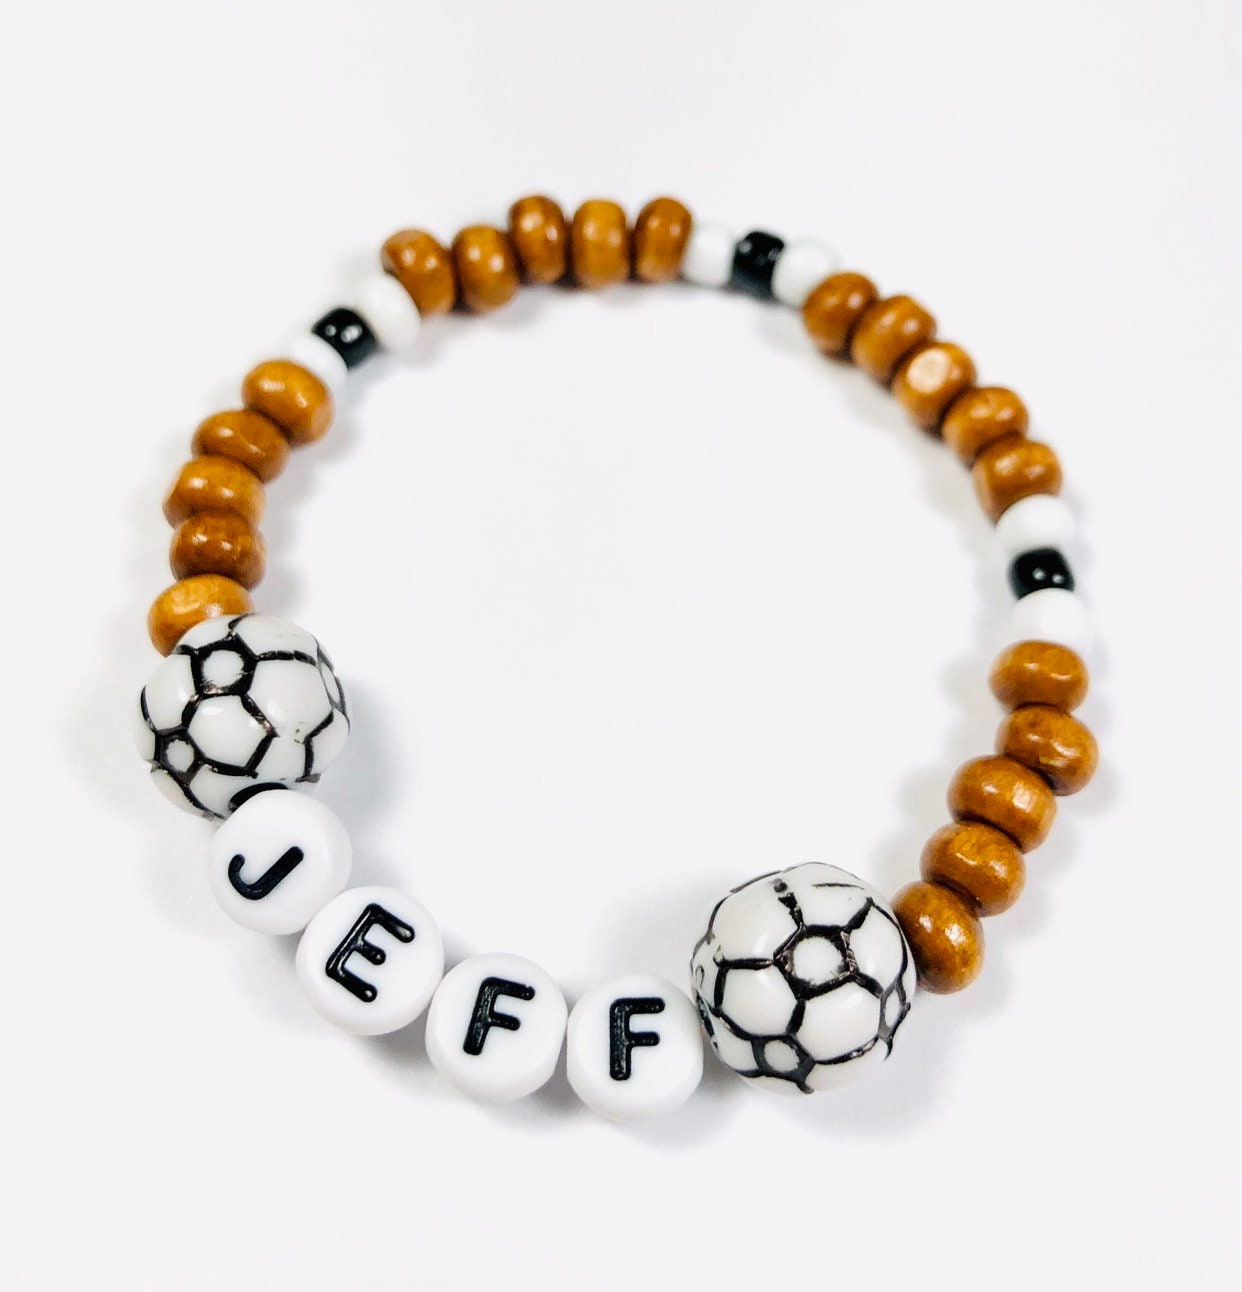 Soccer bracelet for boys / soccer bracelet for kids / kids jewelry / wooden kids bracelet